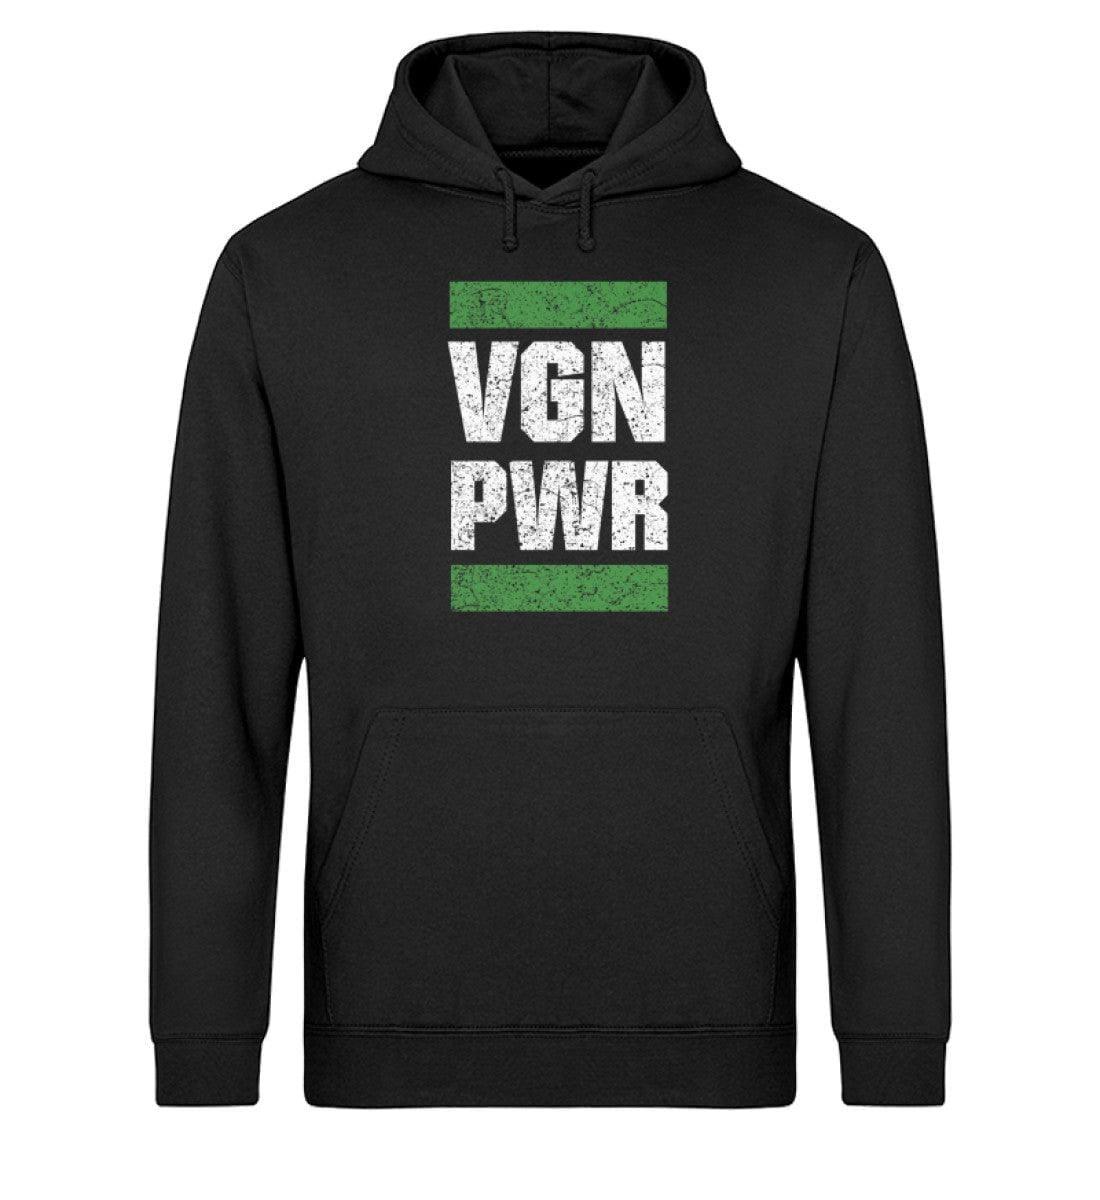 VGN PWR - Unisex Organic Hoodie - Team Vegan © vegan t shirt